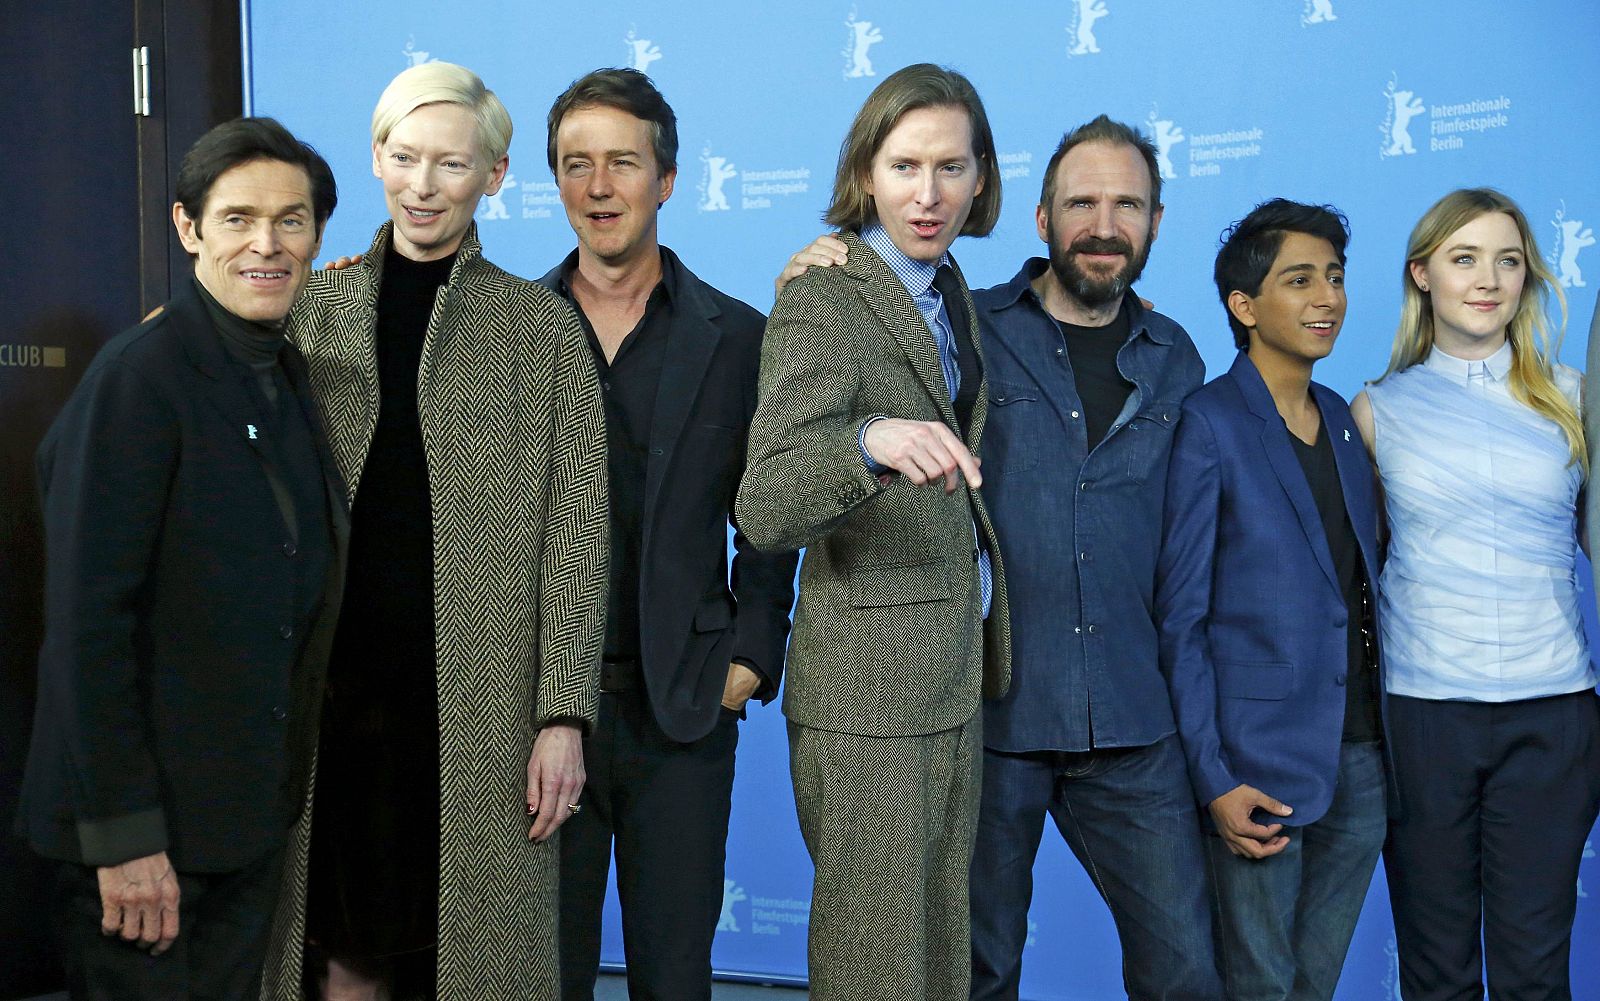 Actors Dafoe, Swinton, Norton, director Anderson, Fiennes, Revolori and Ronan pose to promote the movie "The Grand Budapest Hotel" at the 64th Berlinale International Film Festival in Berlin